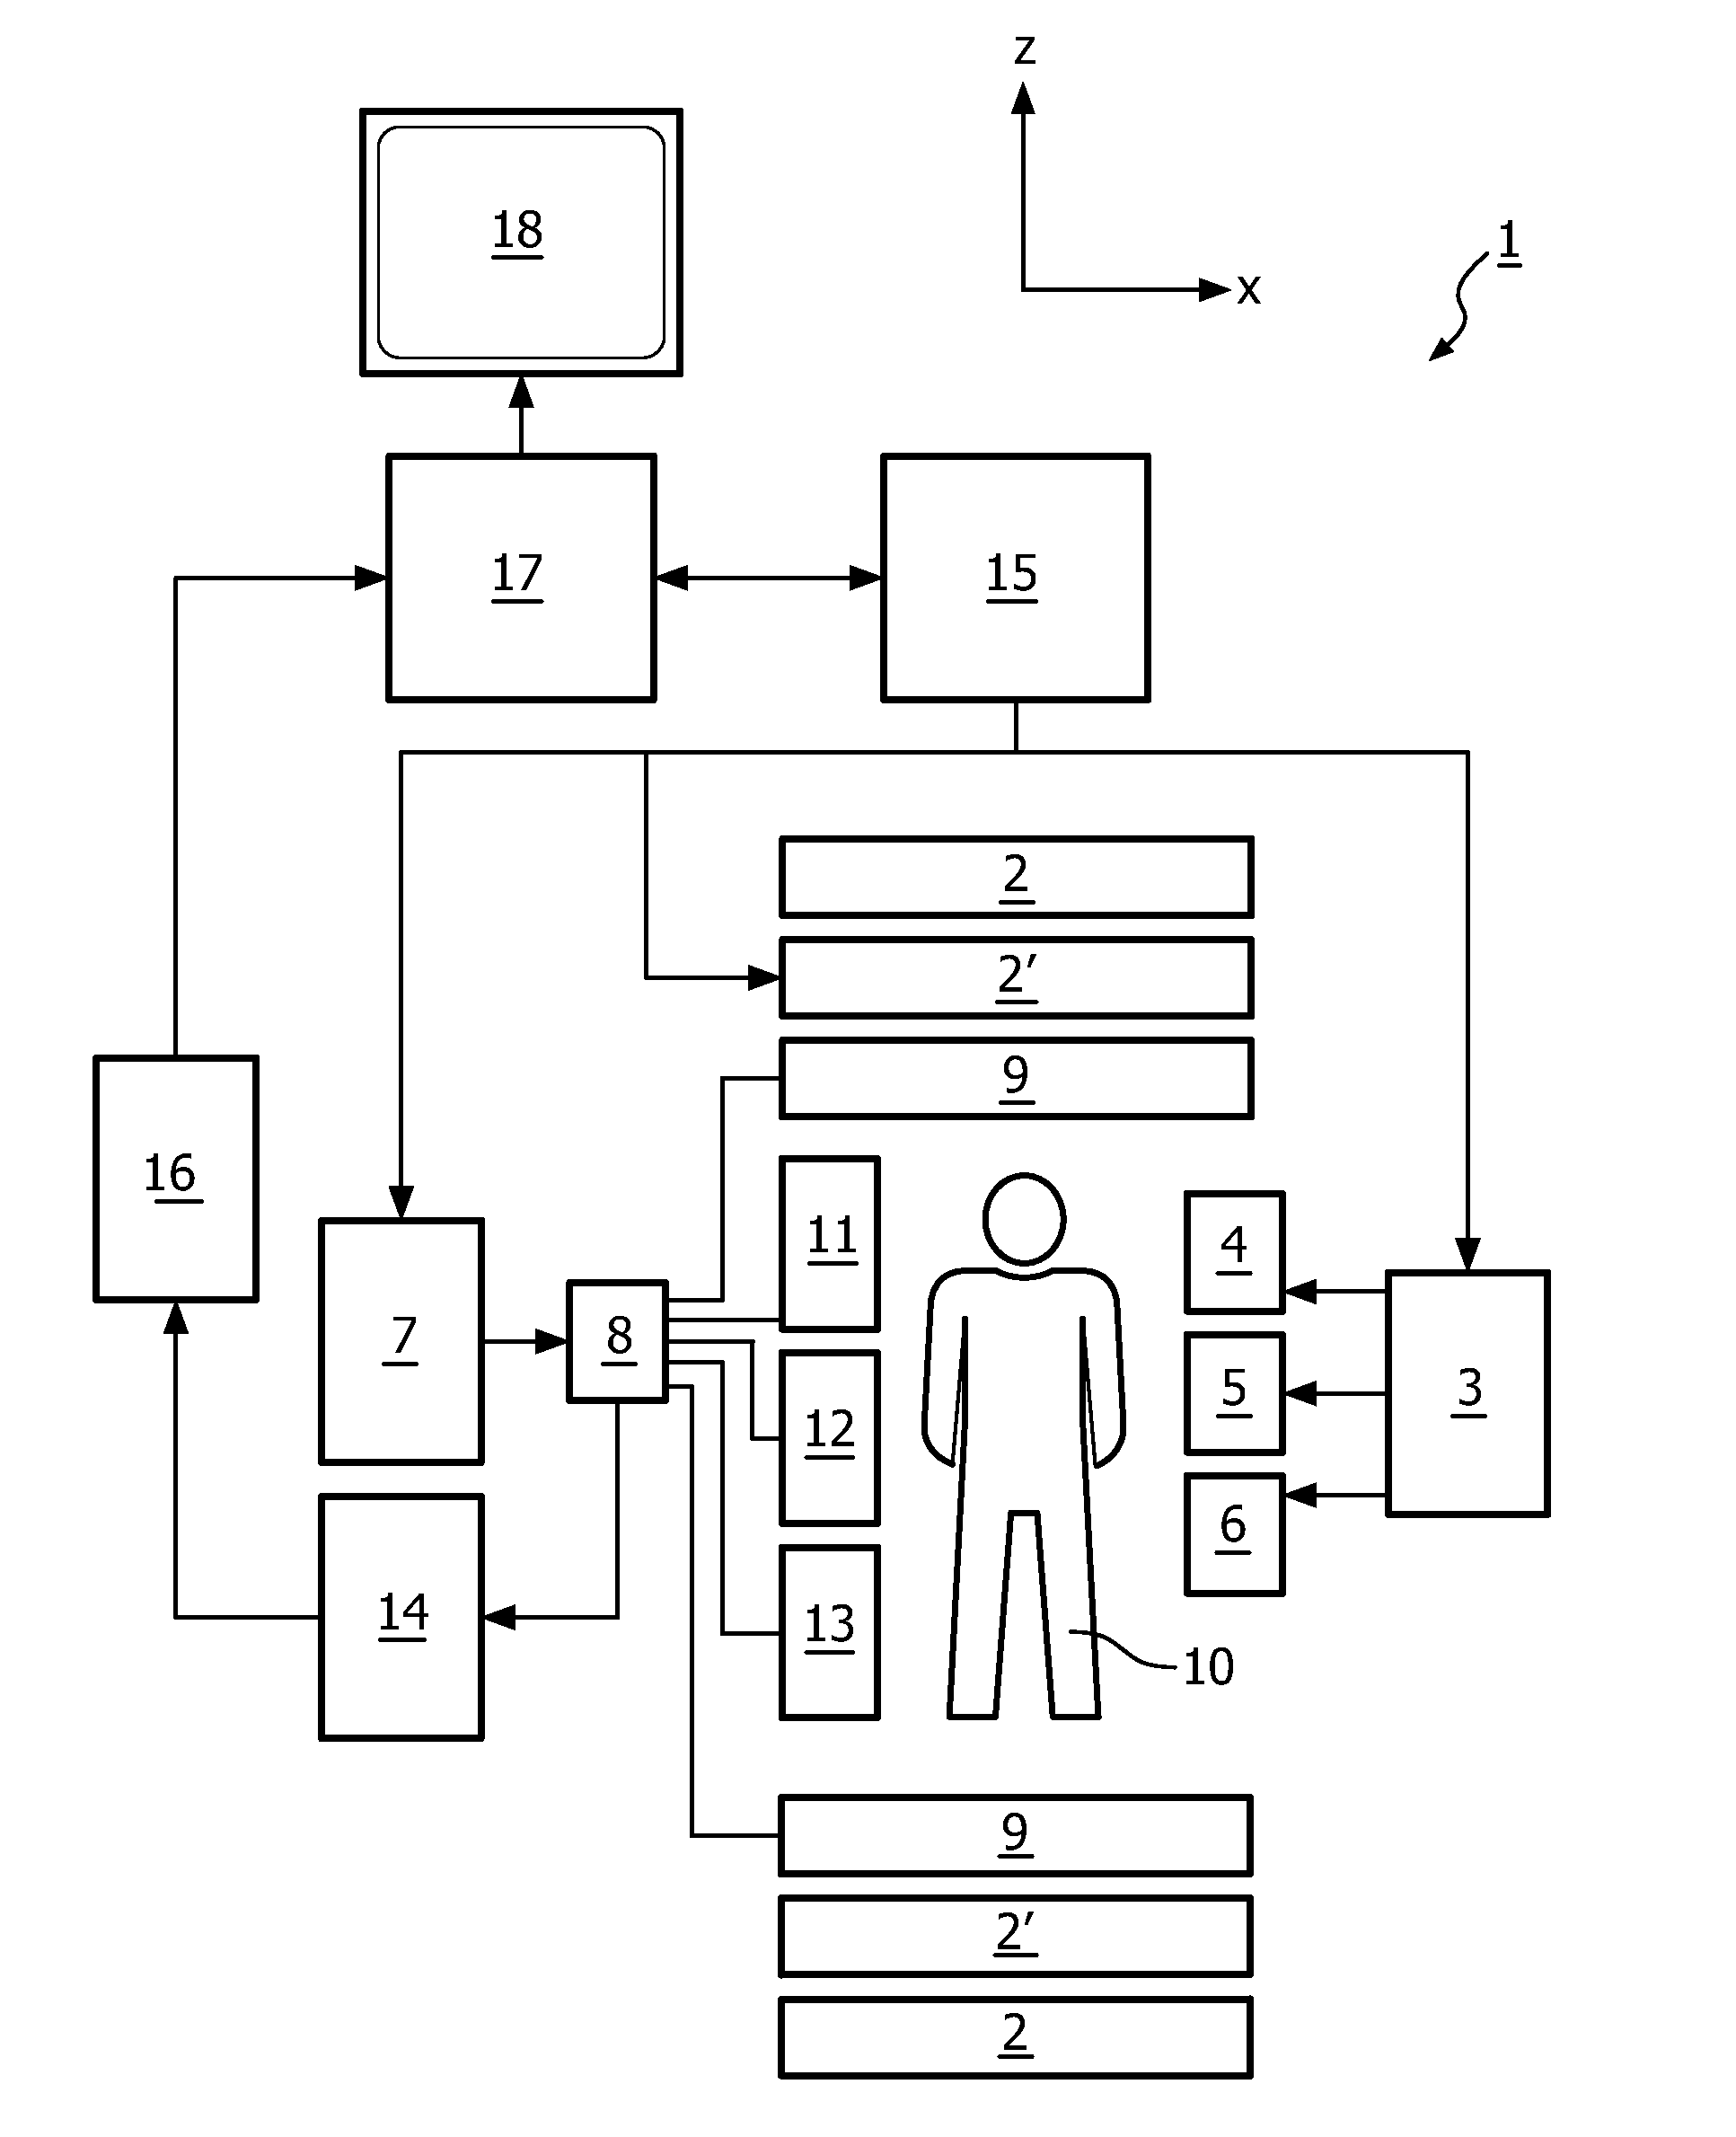 Mr imaging using a multi-point dixon technique